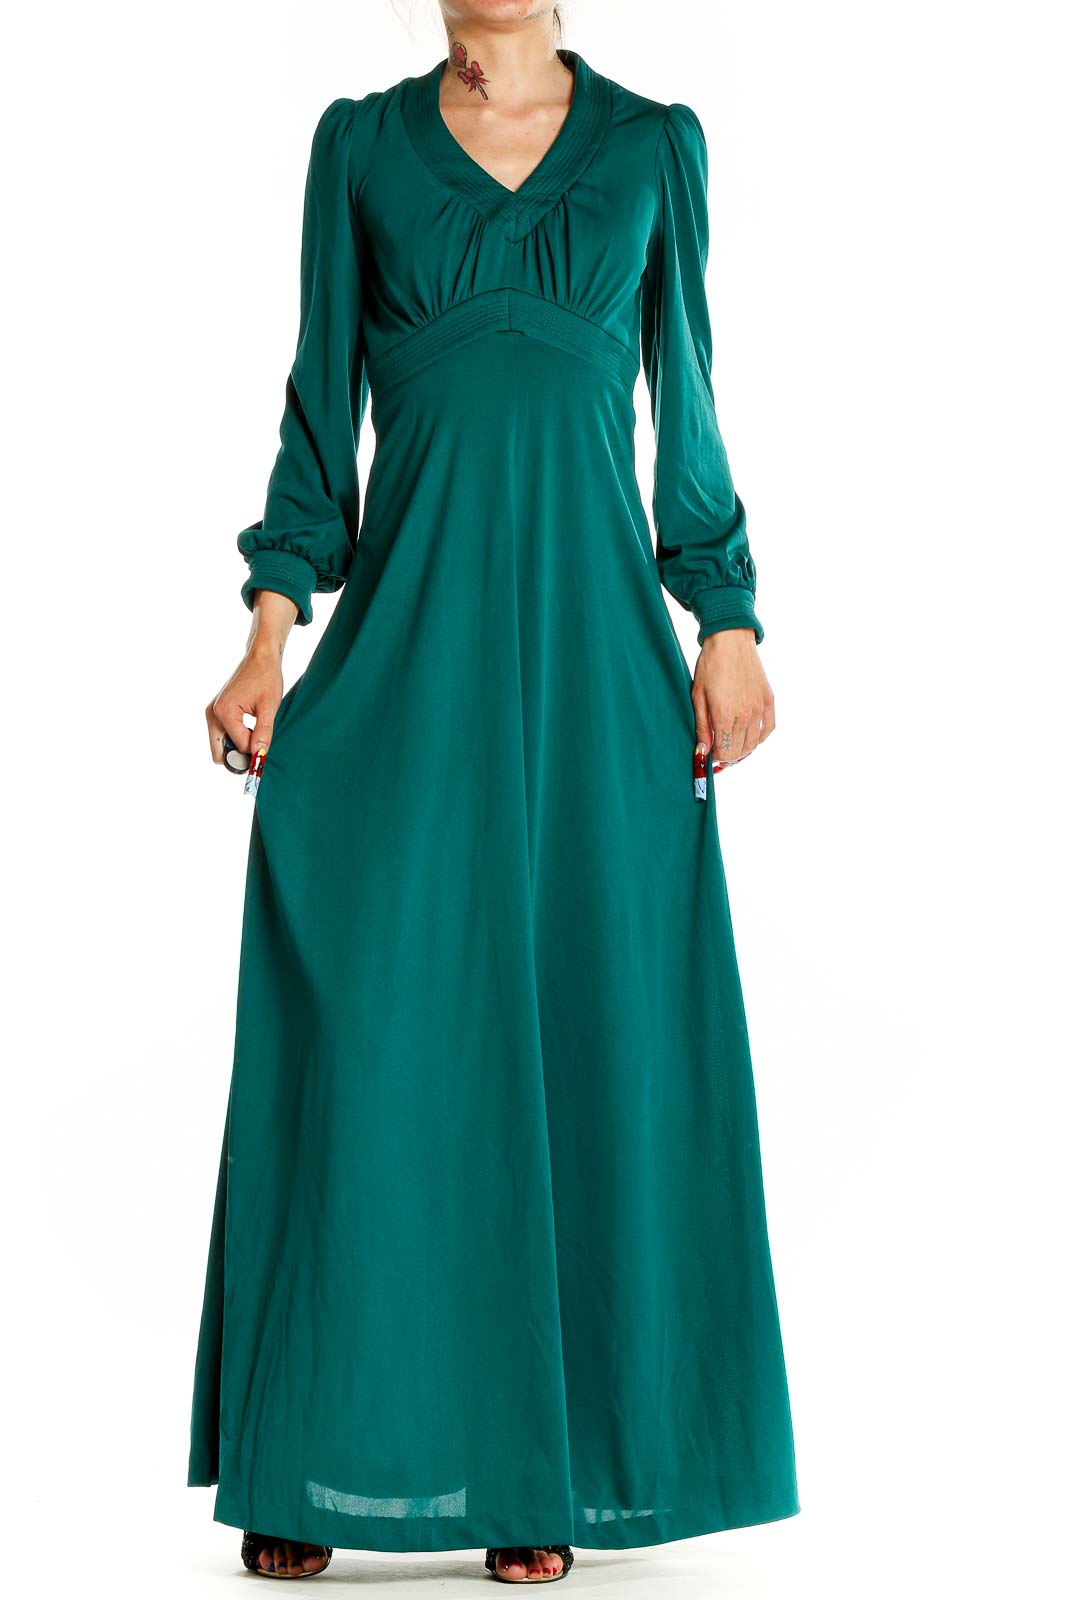 Green Long Sleeve Retro Column Dress Front